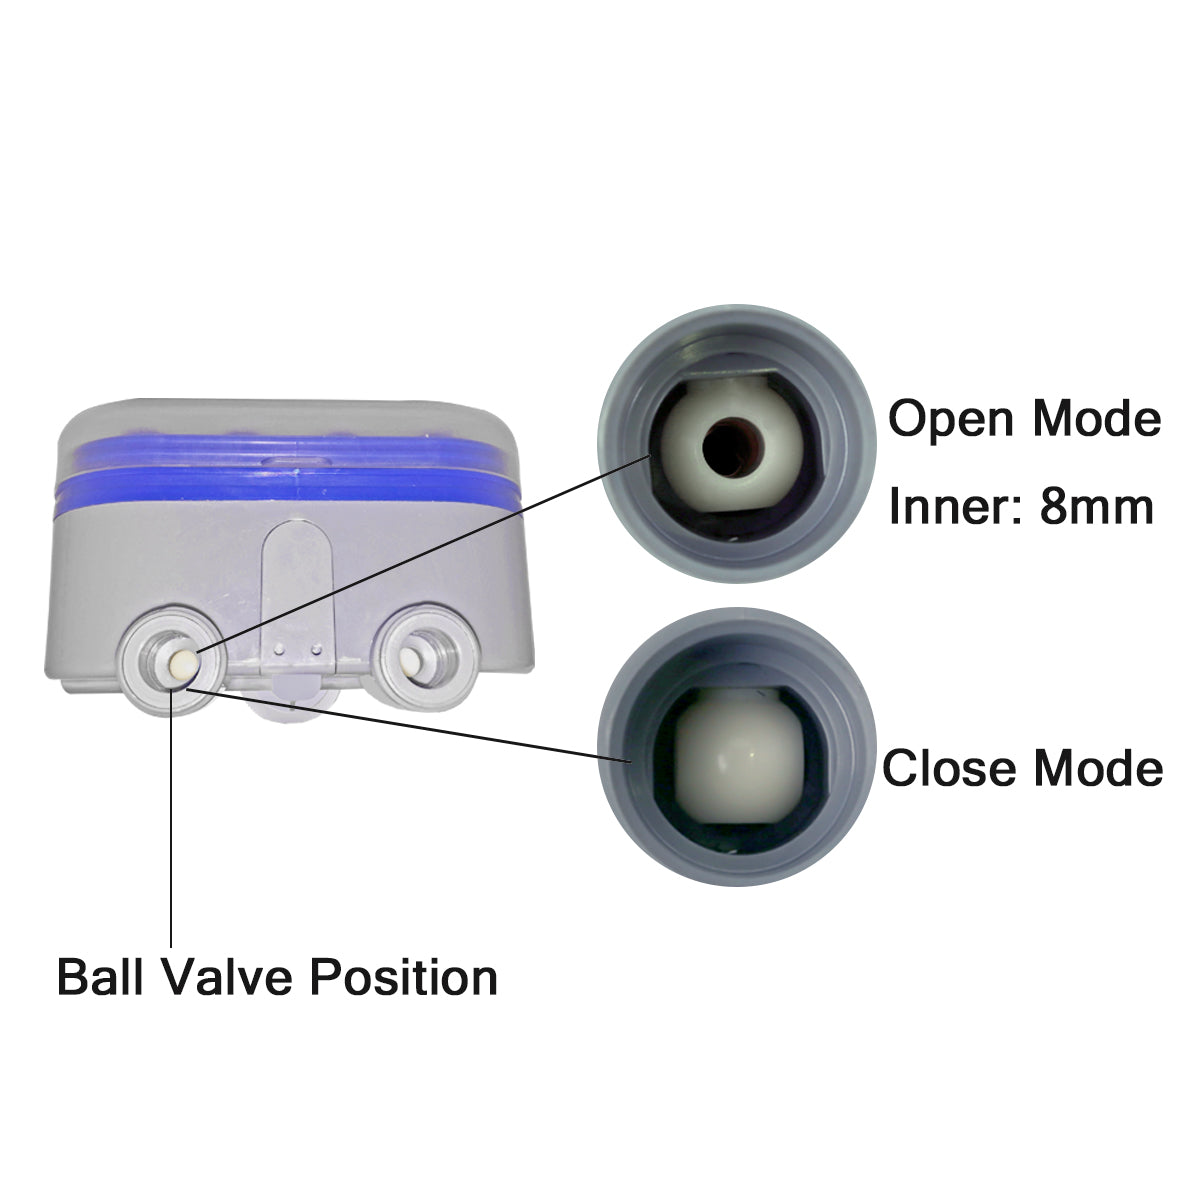 Yardeen Dual-Valve Hose Water Timer Sprinkler Timer Irrigation Controller Ball Valve, Blue